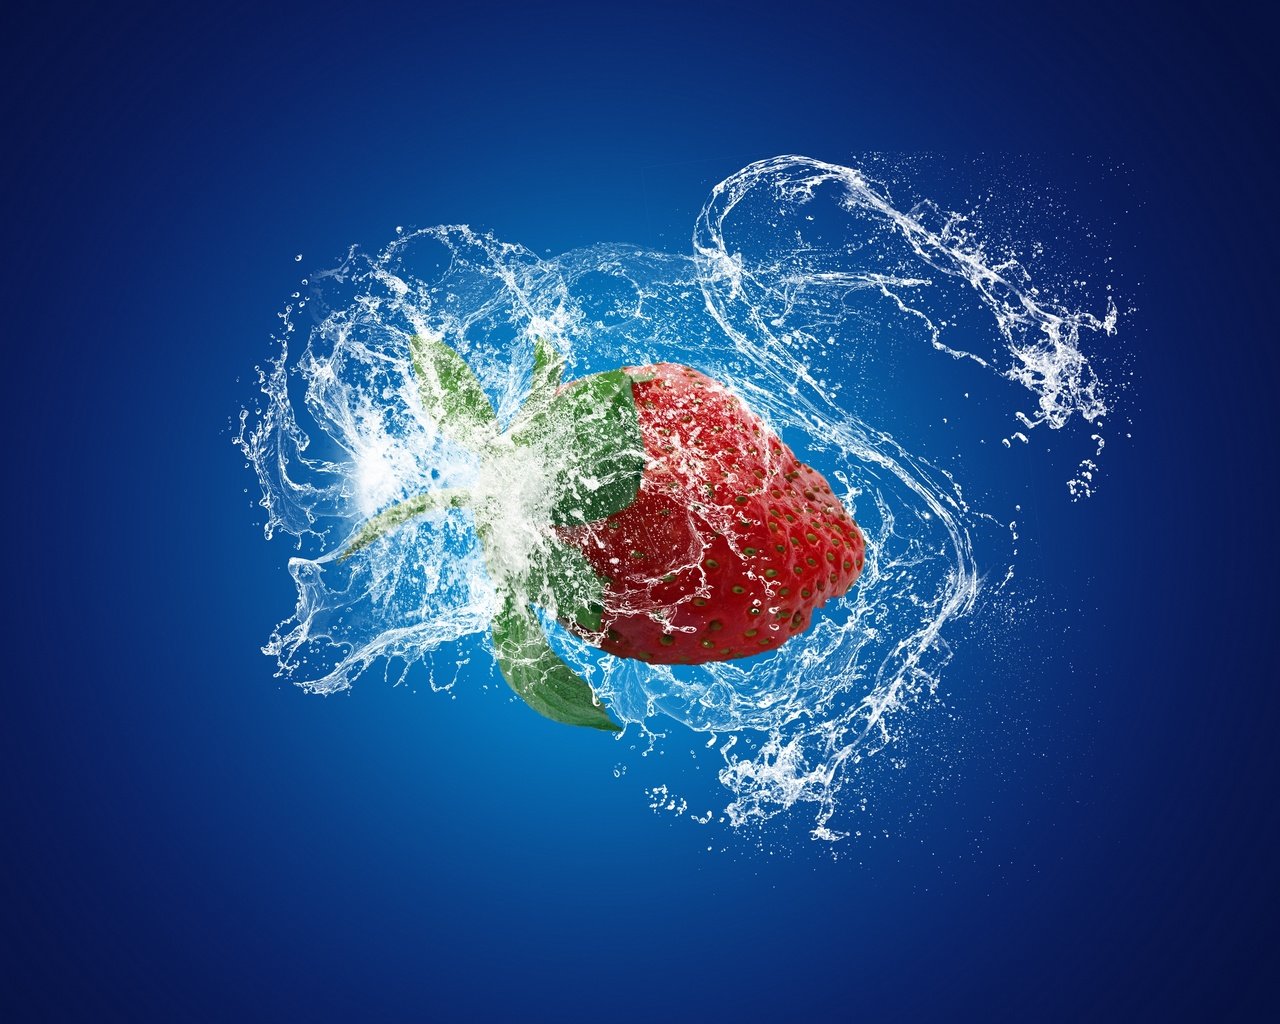 Обои вода, фон, ягода, клубника, брызги, water, background, berry, strawberry, squirt разрешение 2880x2468 Загрузить